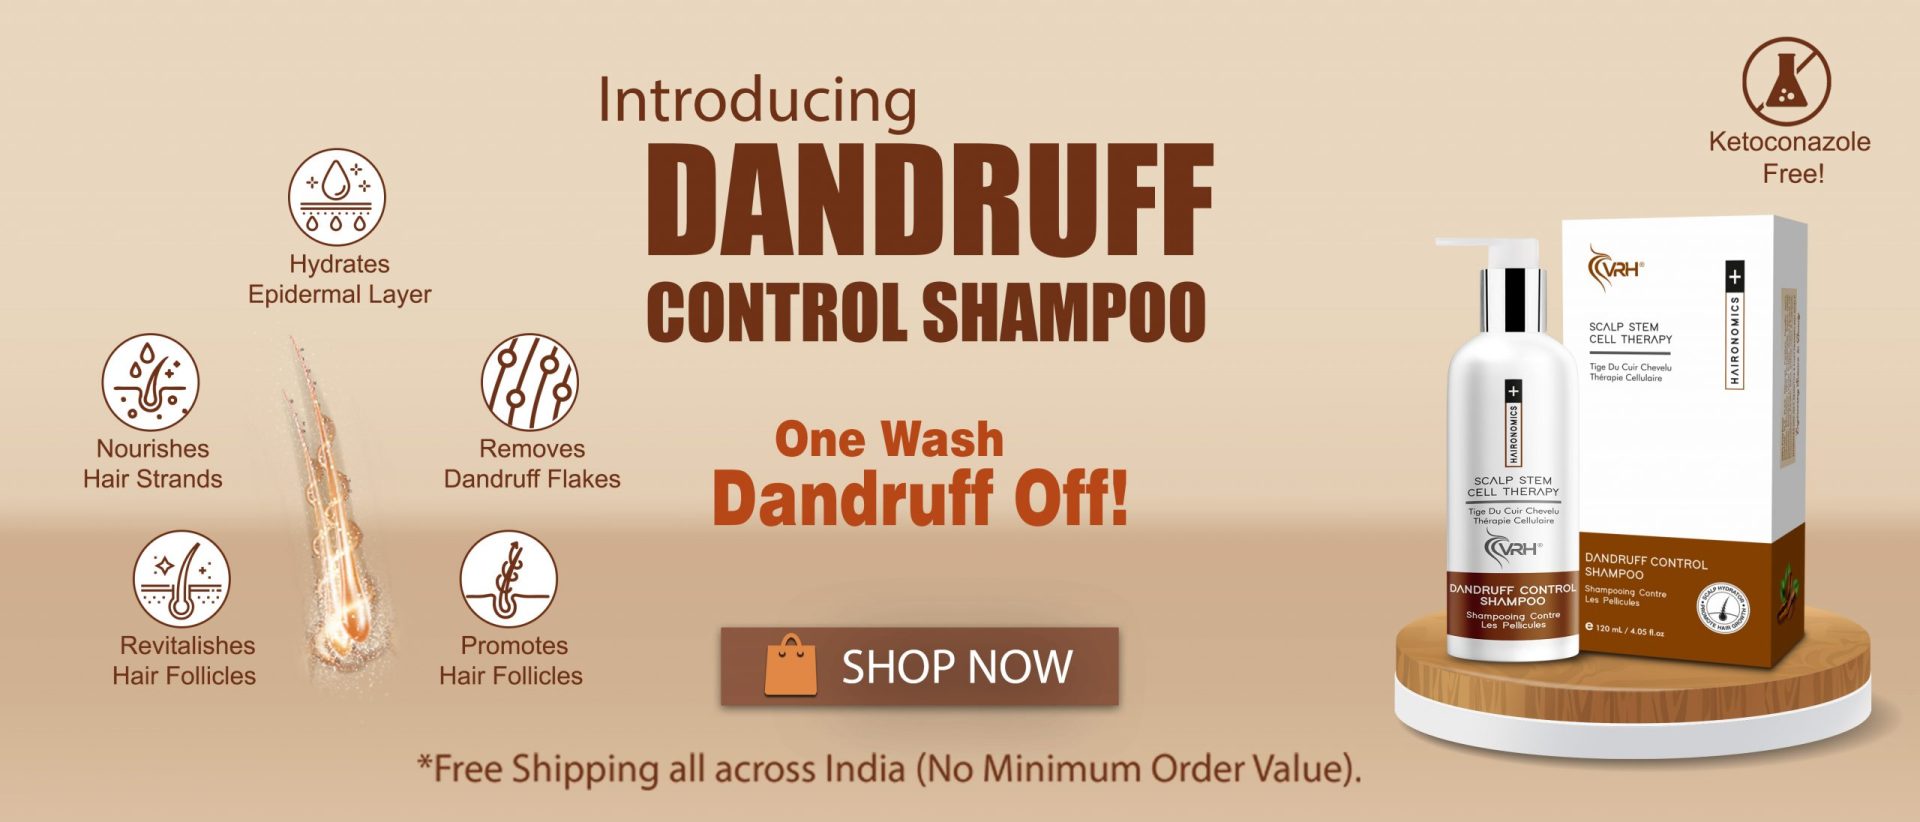 vrh dandruff control shampoo wallpaper 1